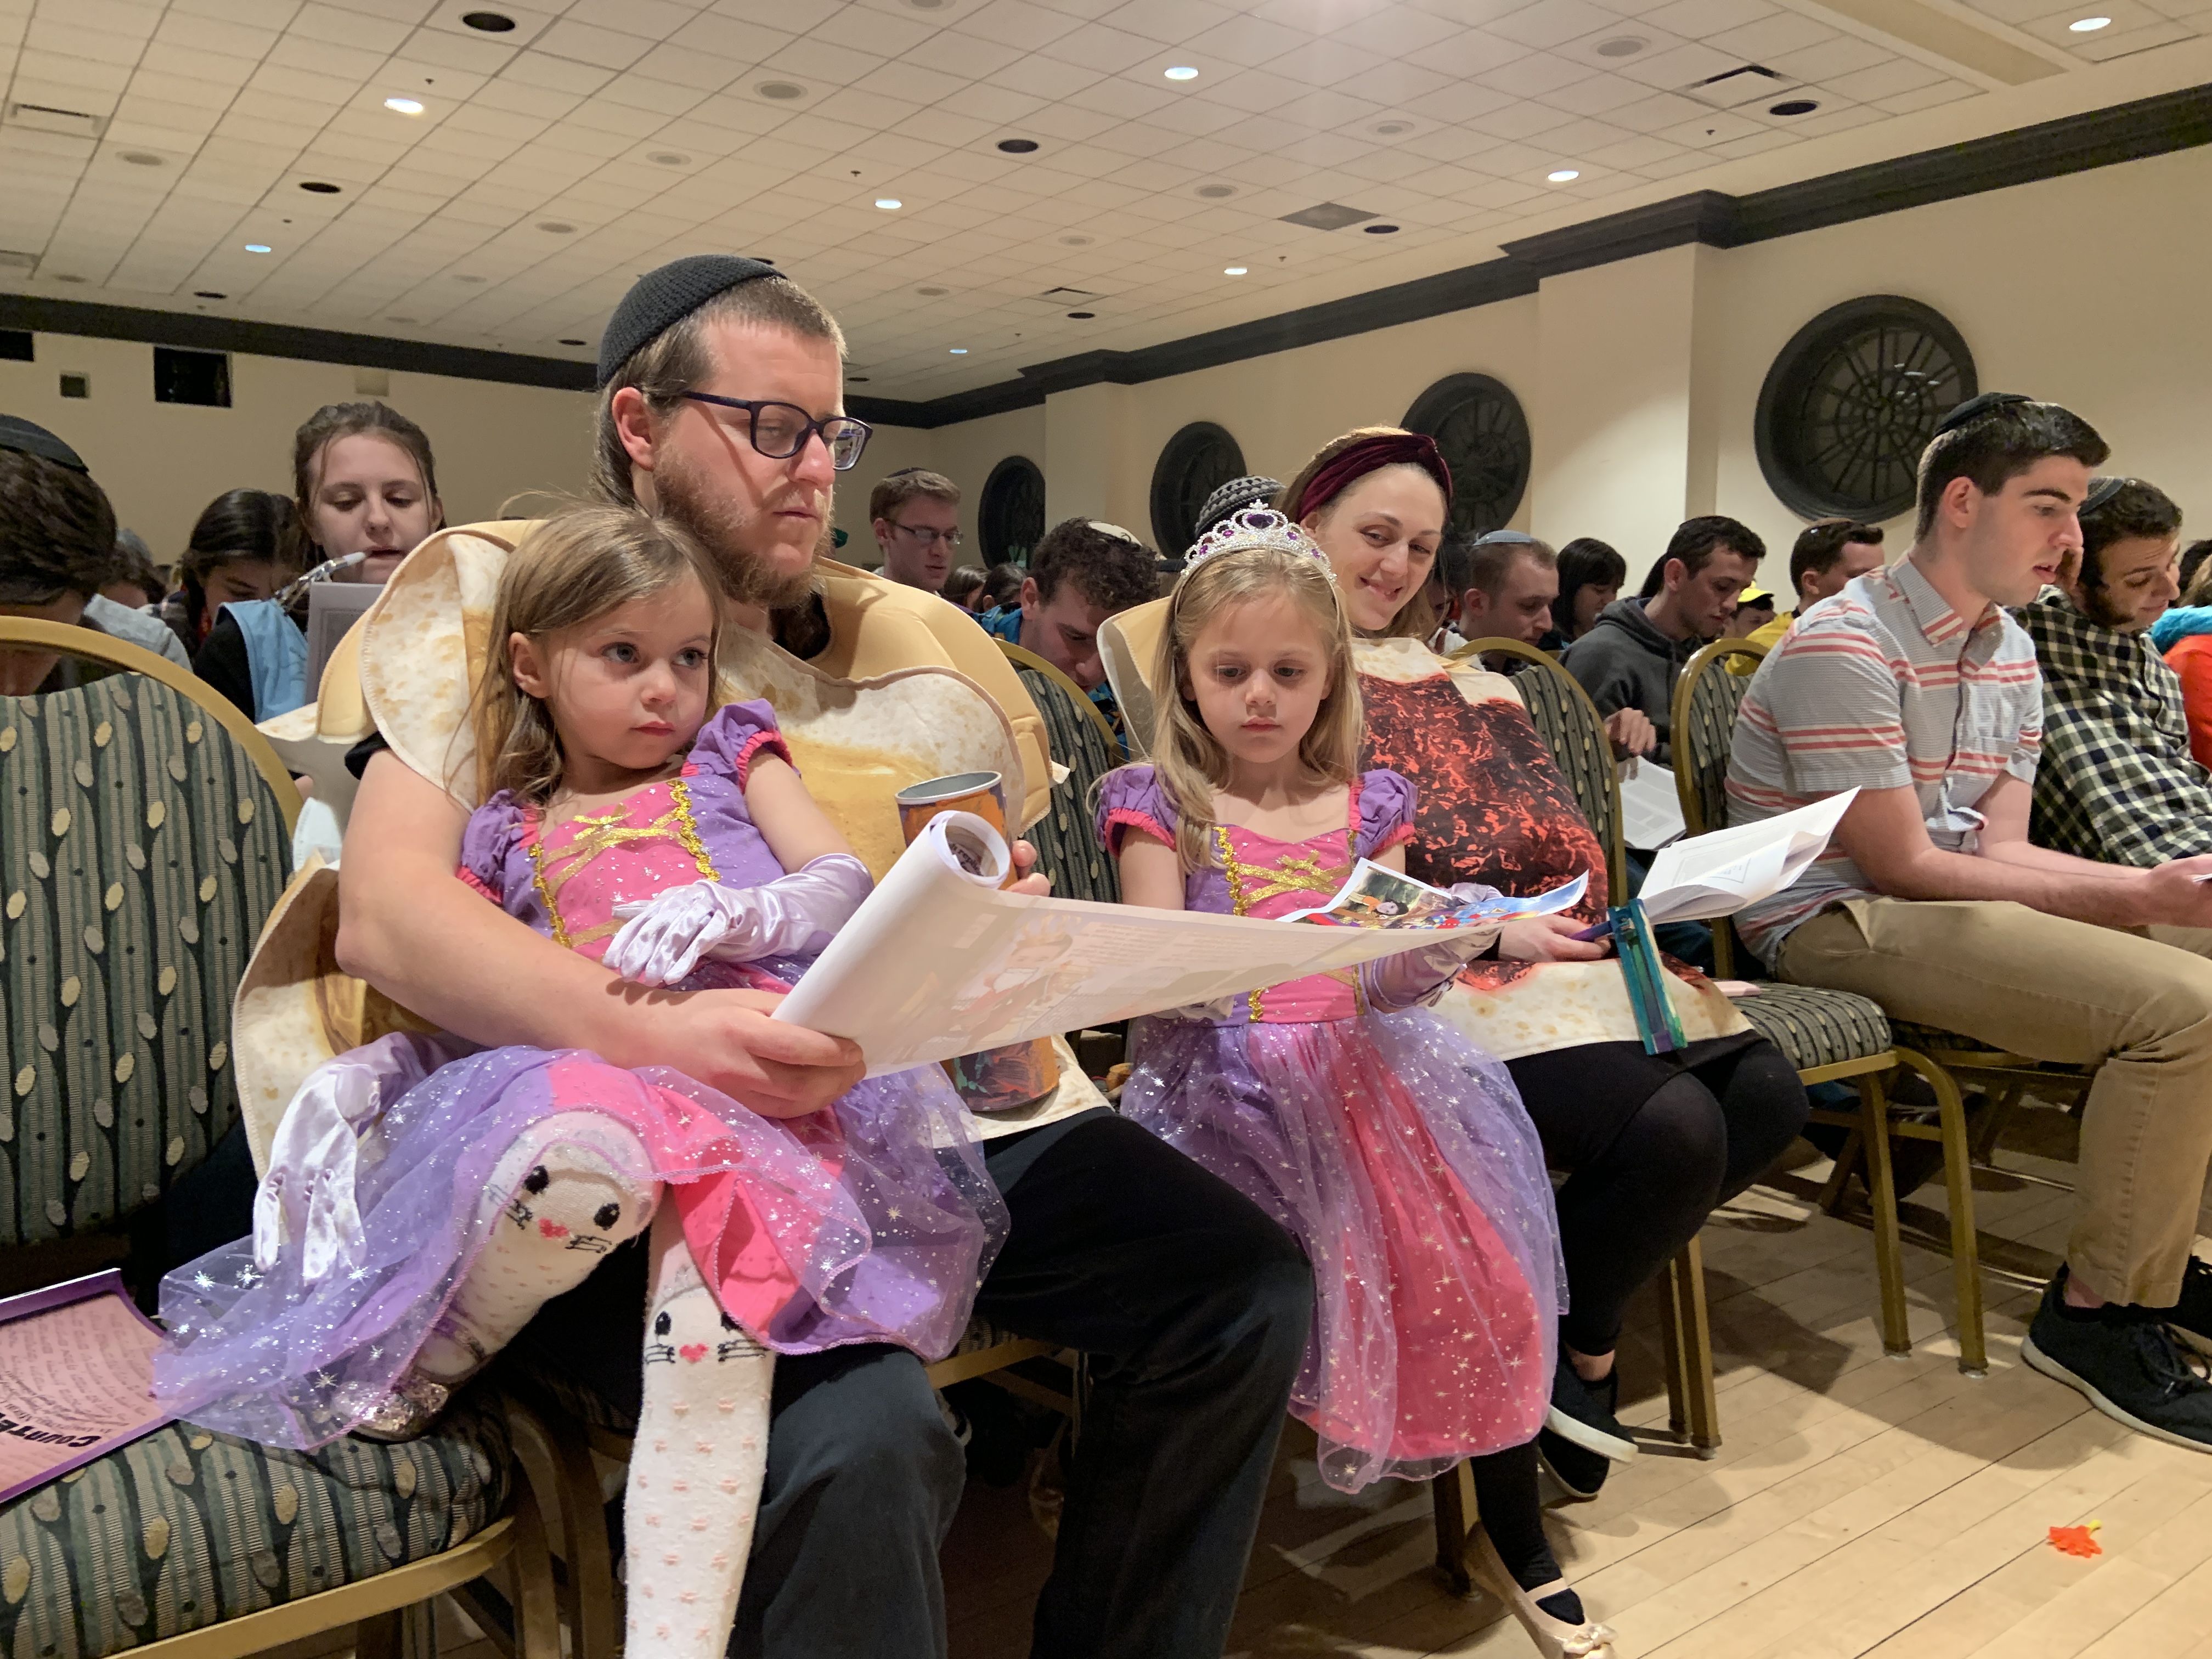 Purim celebrations undimmed despite growing COVID-19 concerns